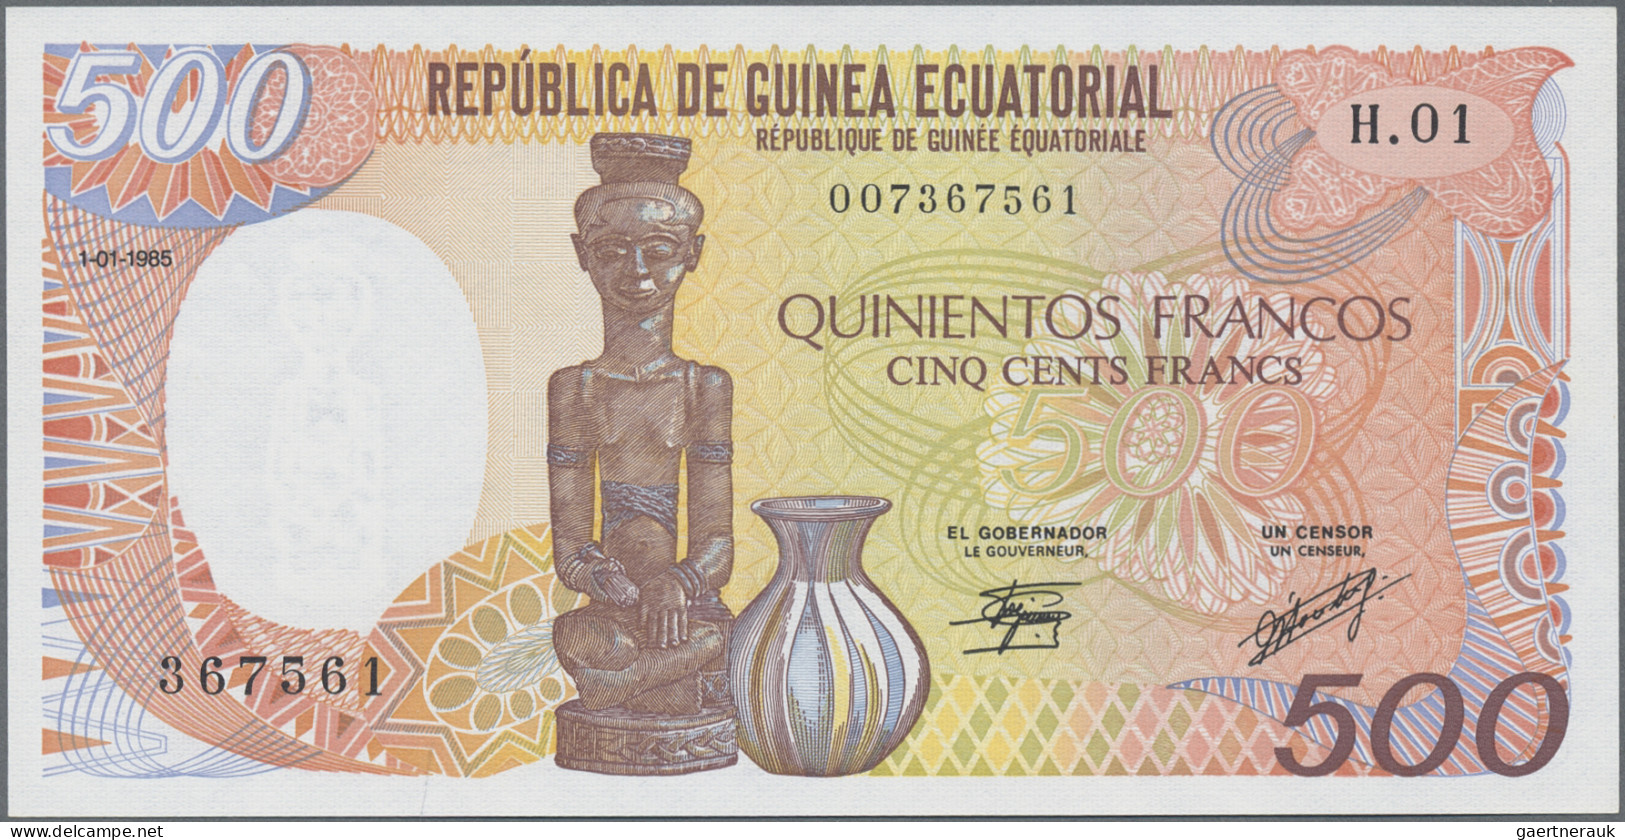 Equatorial Guinea: Banque Des États De L'Afrique Centrale - República De Guinea - Guinea Ecuatorial